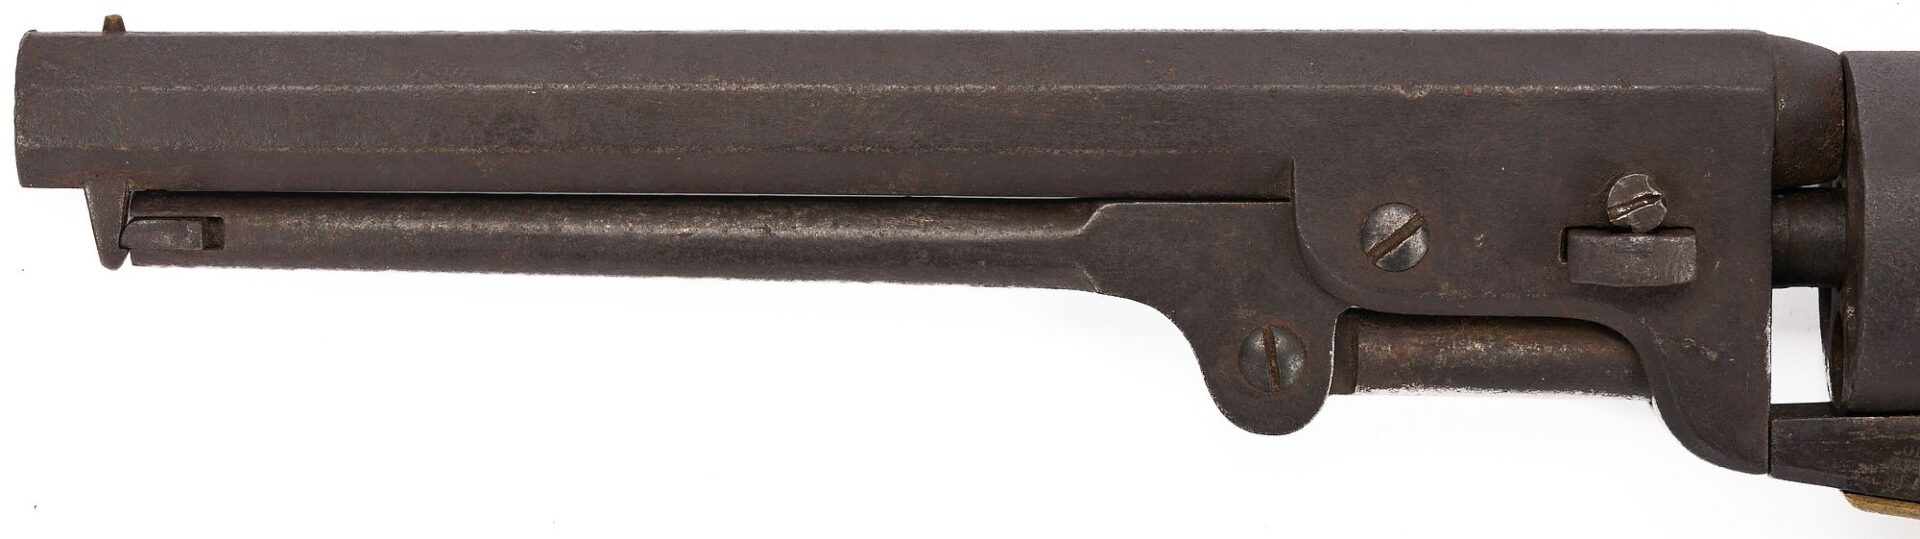 Lot 548: Colt Model 1851 NavyÃÂ Revolver; 1857